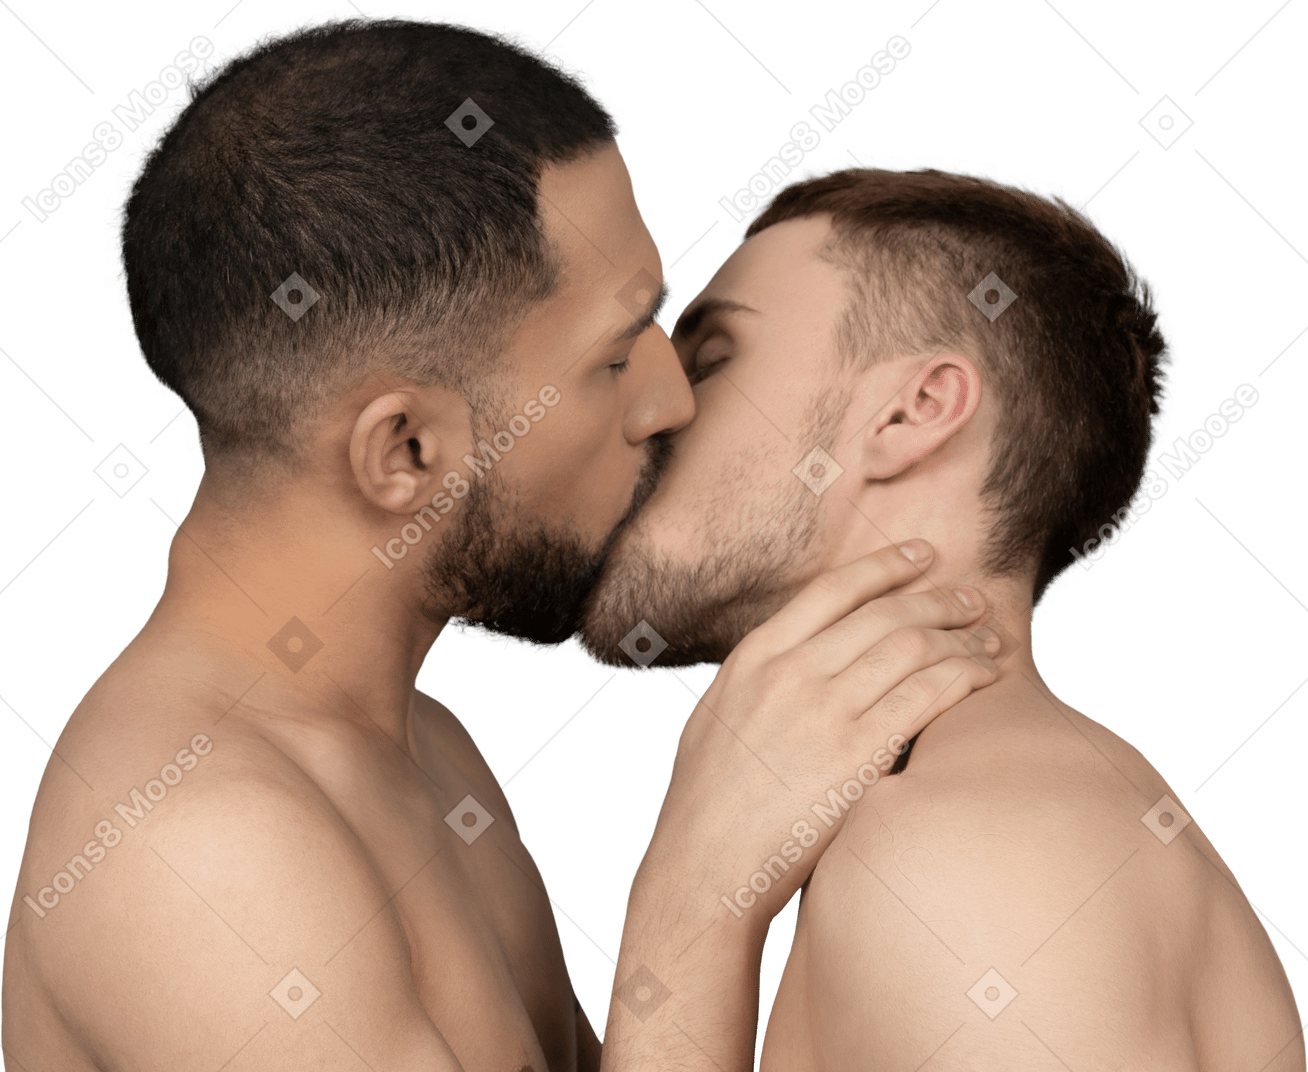 Крупный план двух кавказских мужчин без рубашки, нежно целующихся